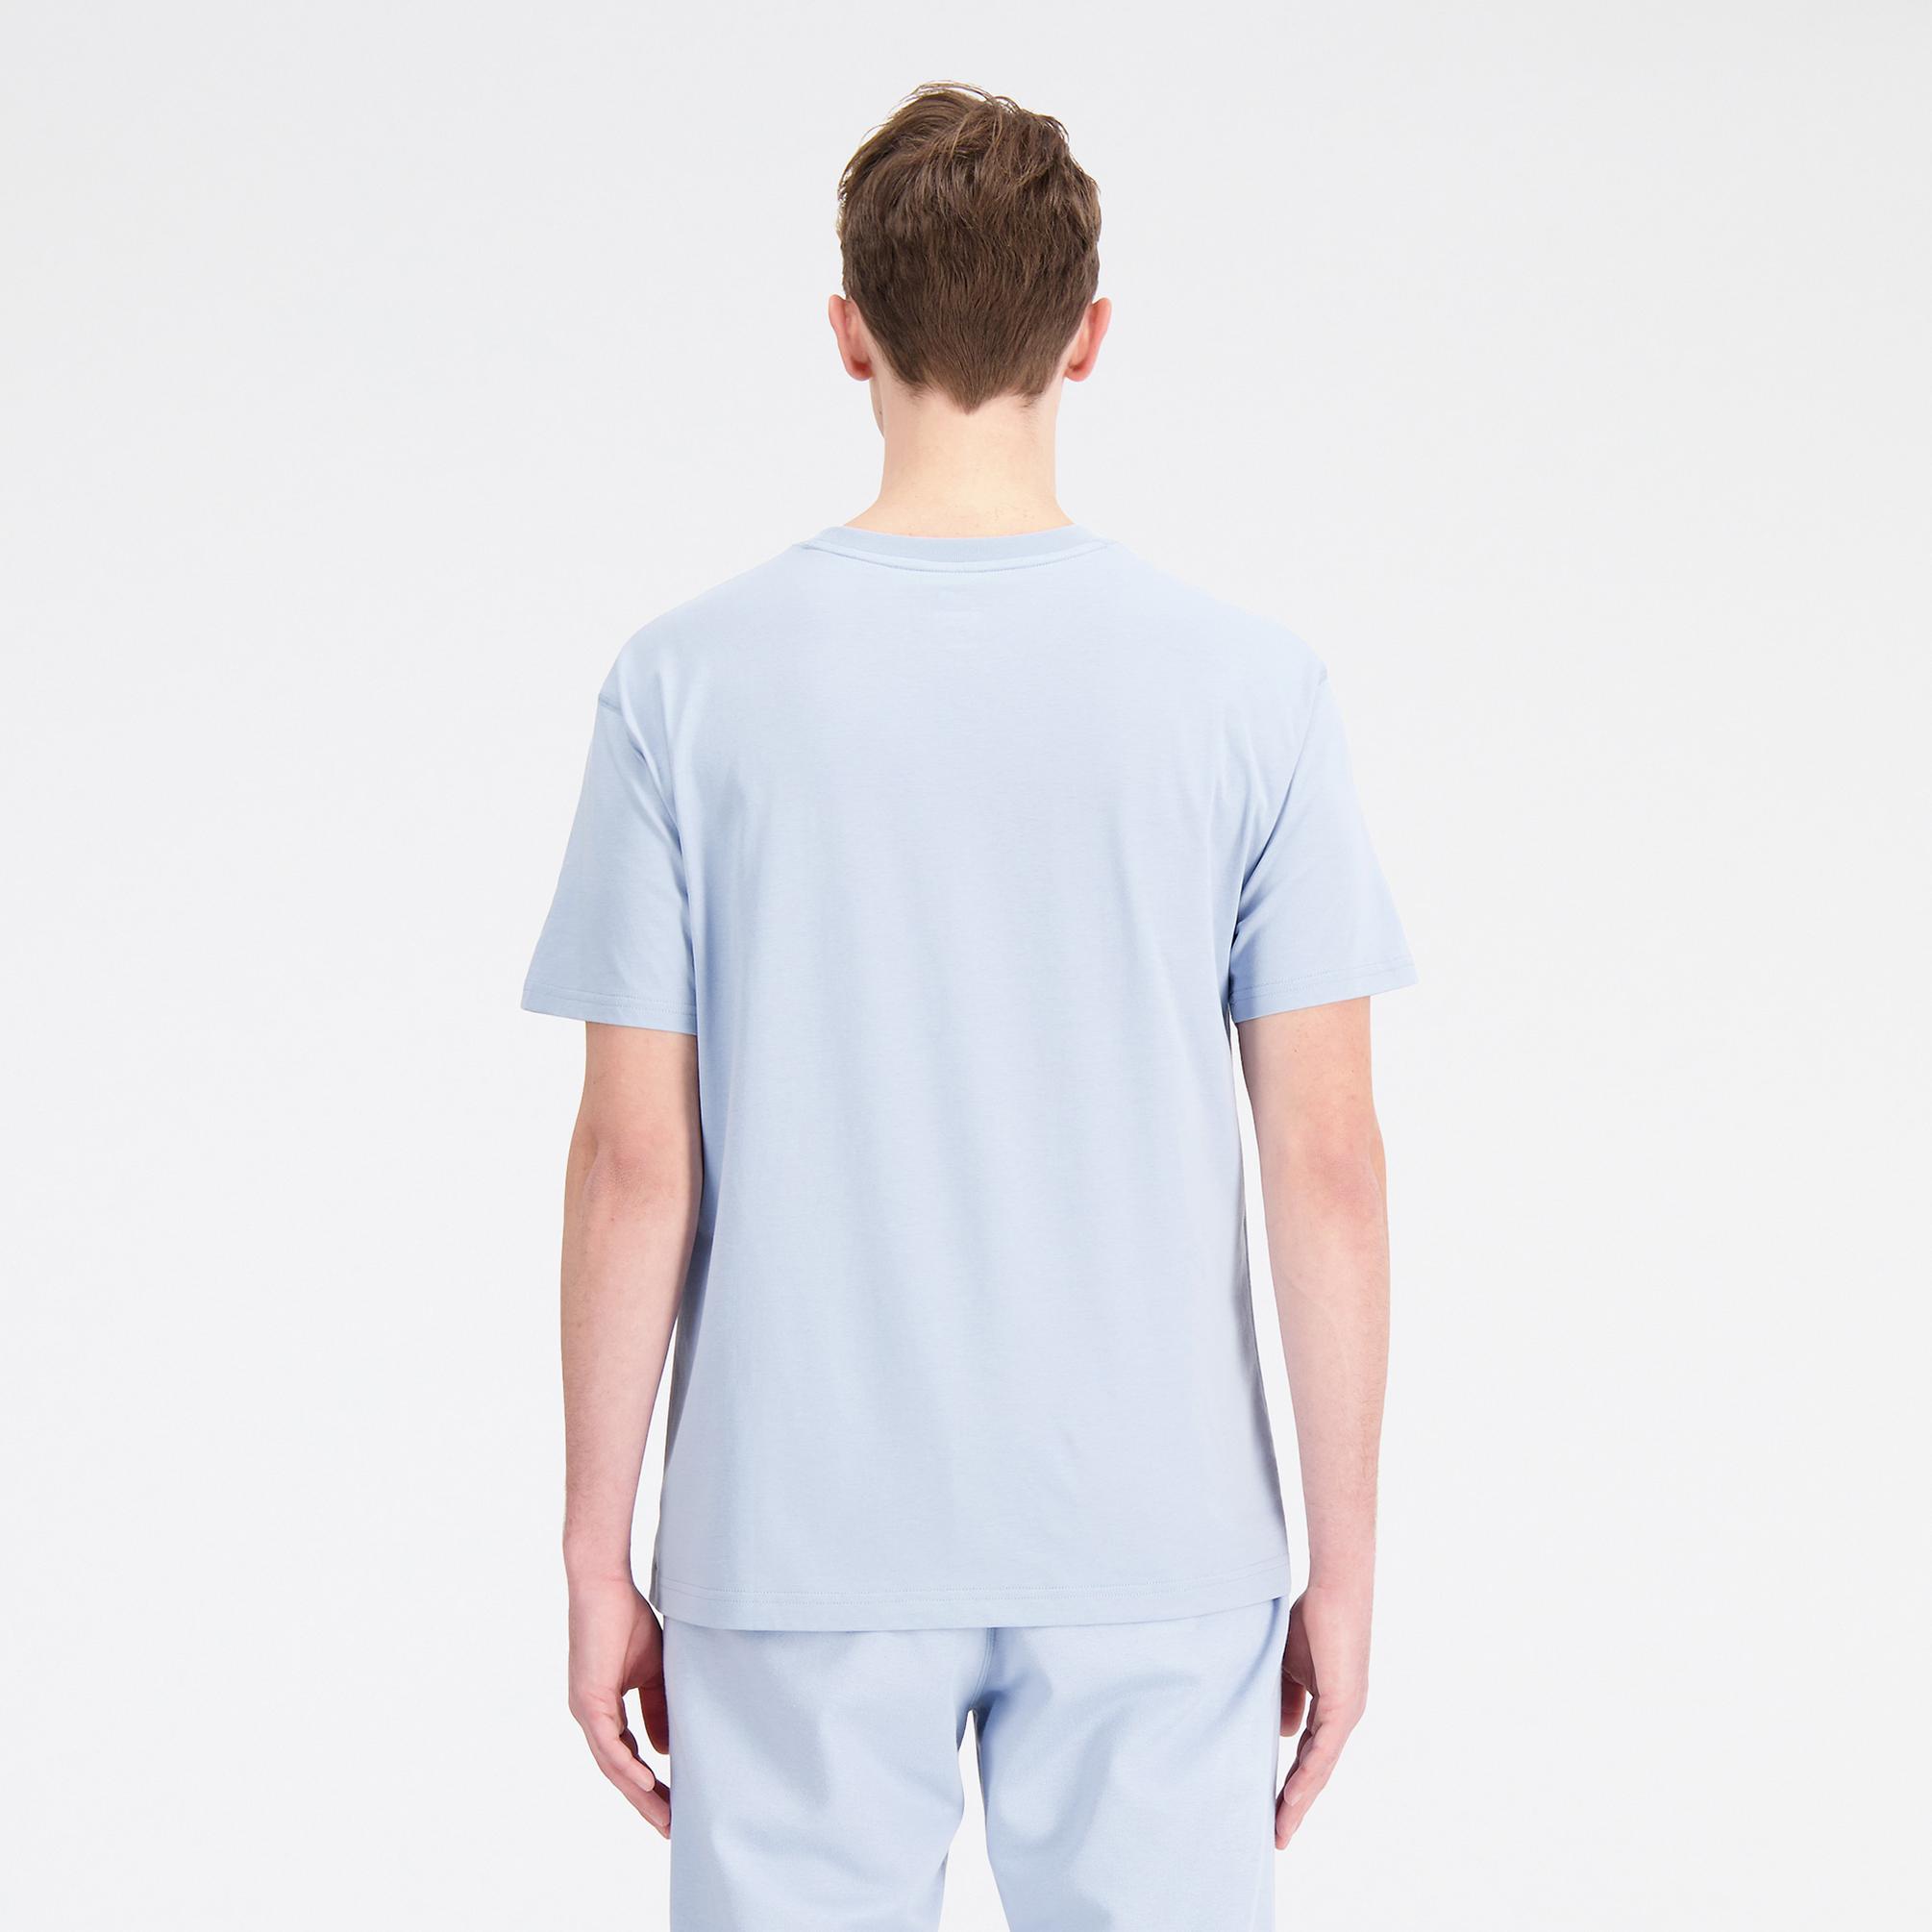  New Balance Uni-ssentials Cotton Erkek Mavi T-Shirt